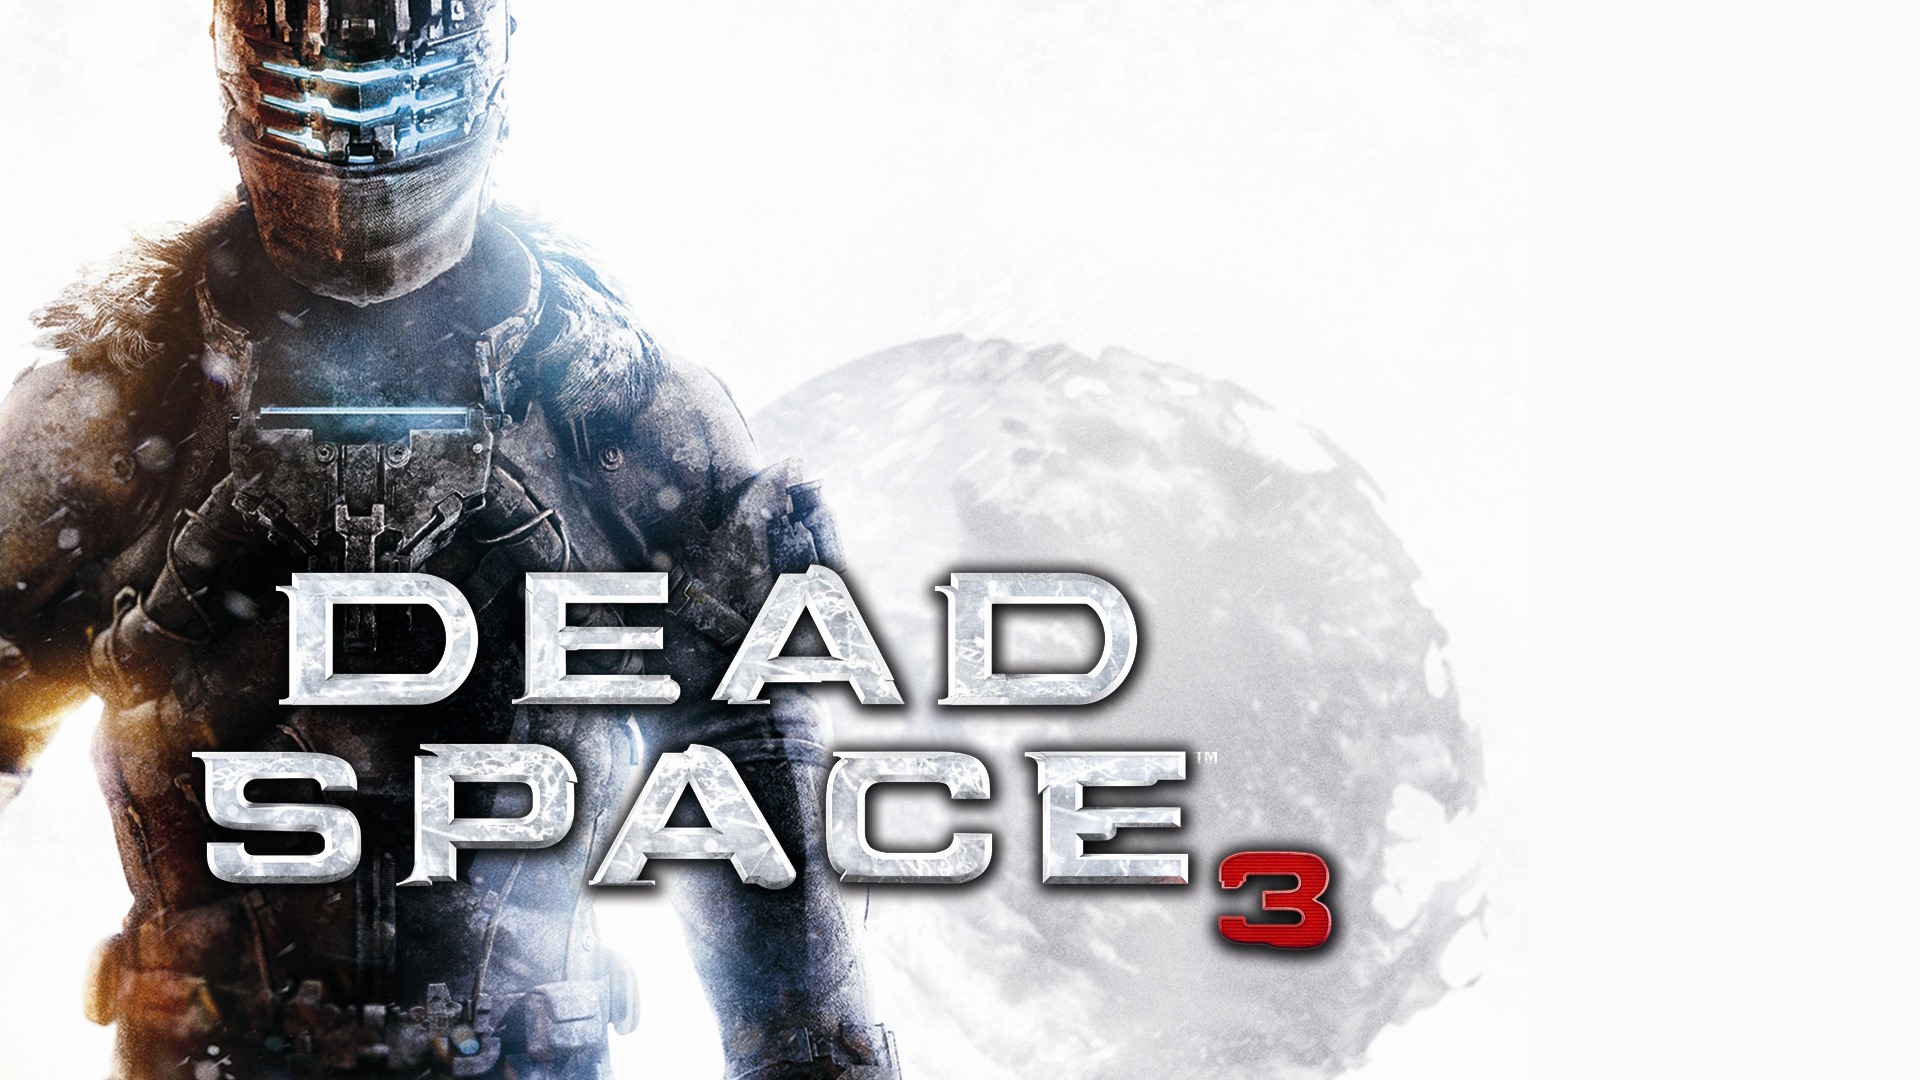 Dead Space 3 HD wallpapers #2 - 1920x1080